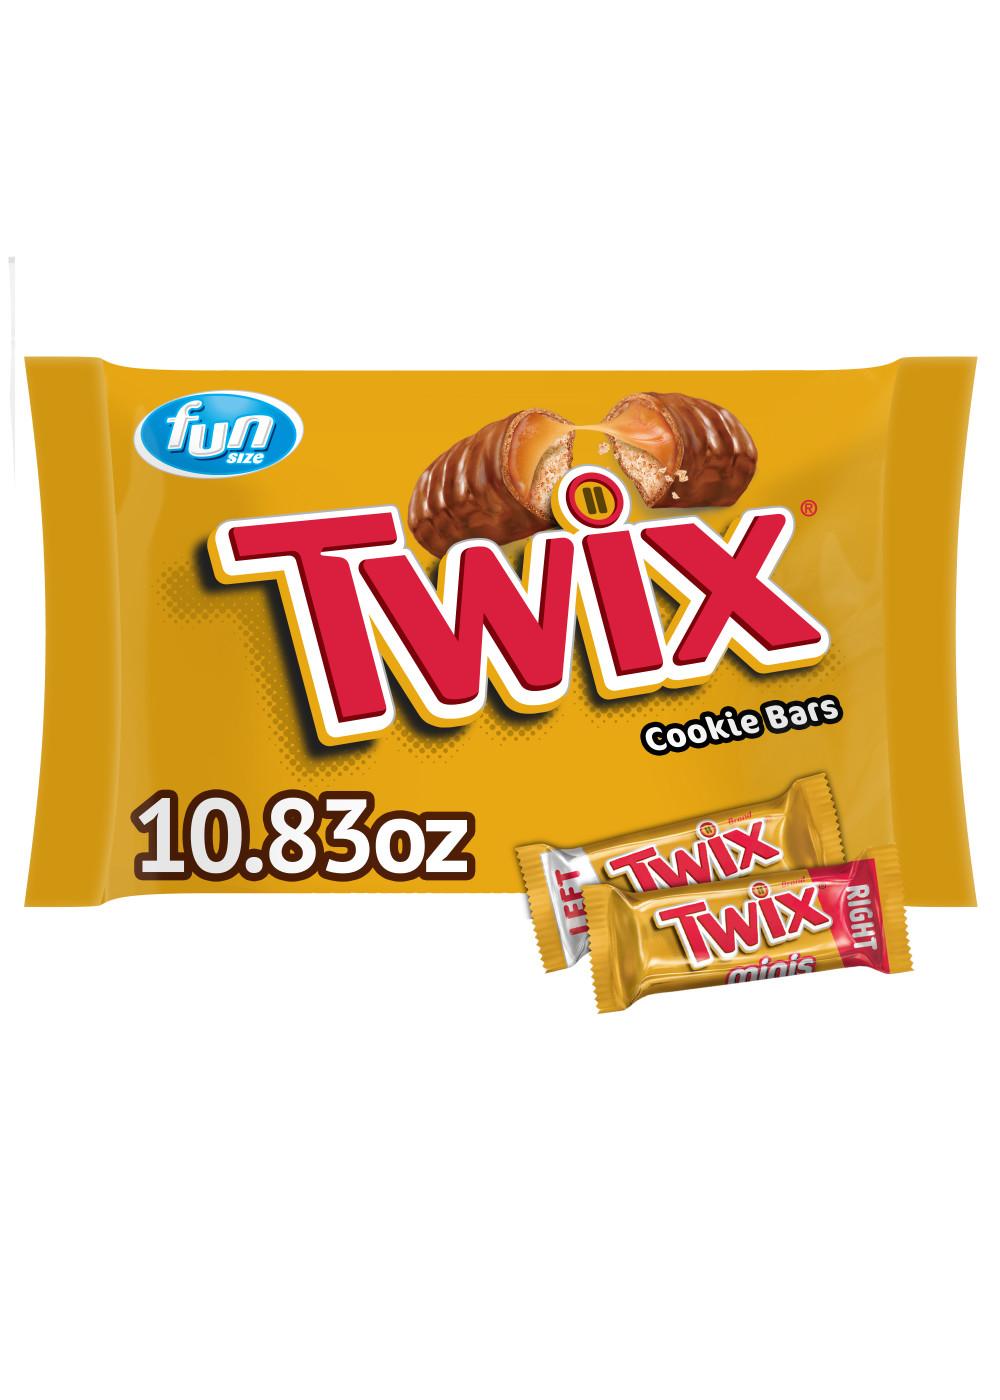 Twix Caramel Chocolate Cookie Fun Size Candy Bars; image 8 of 10